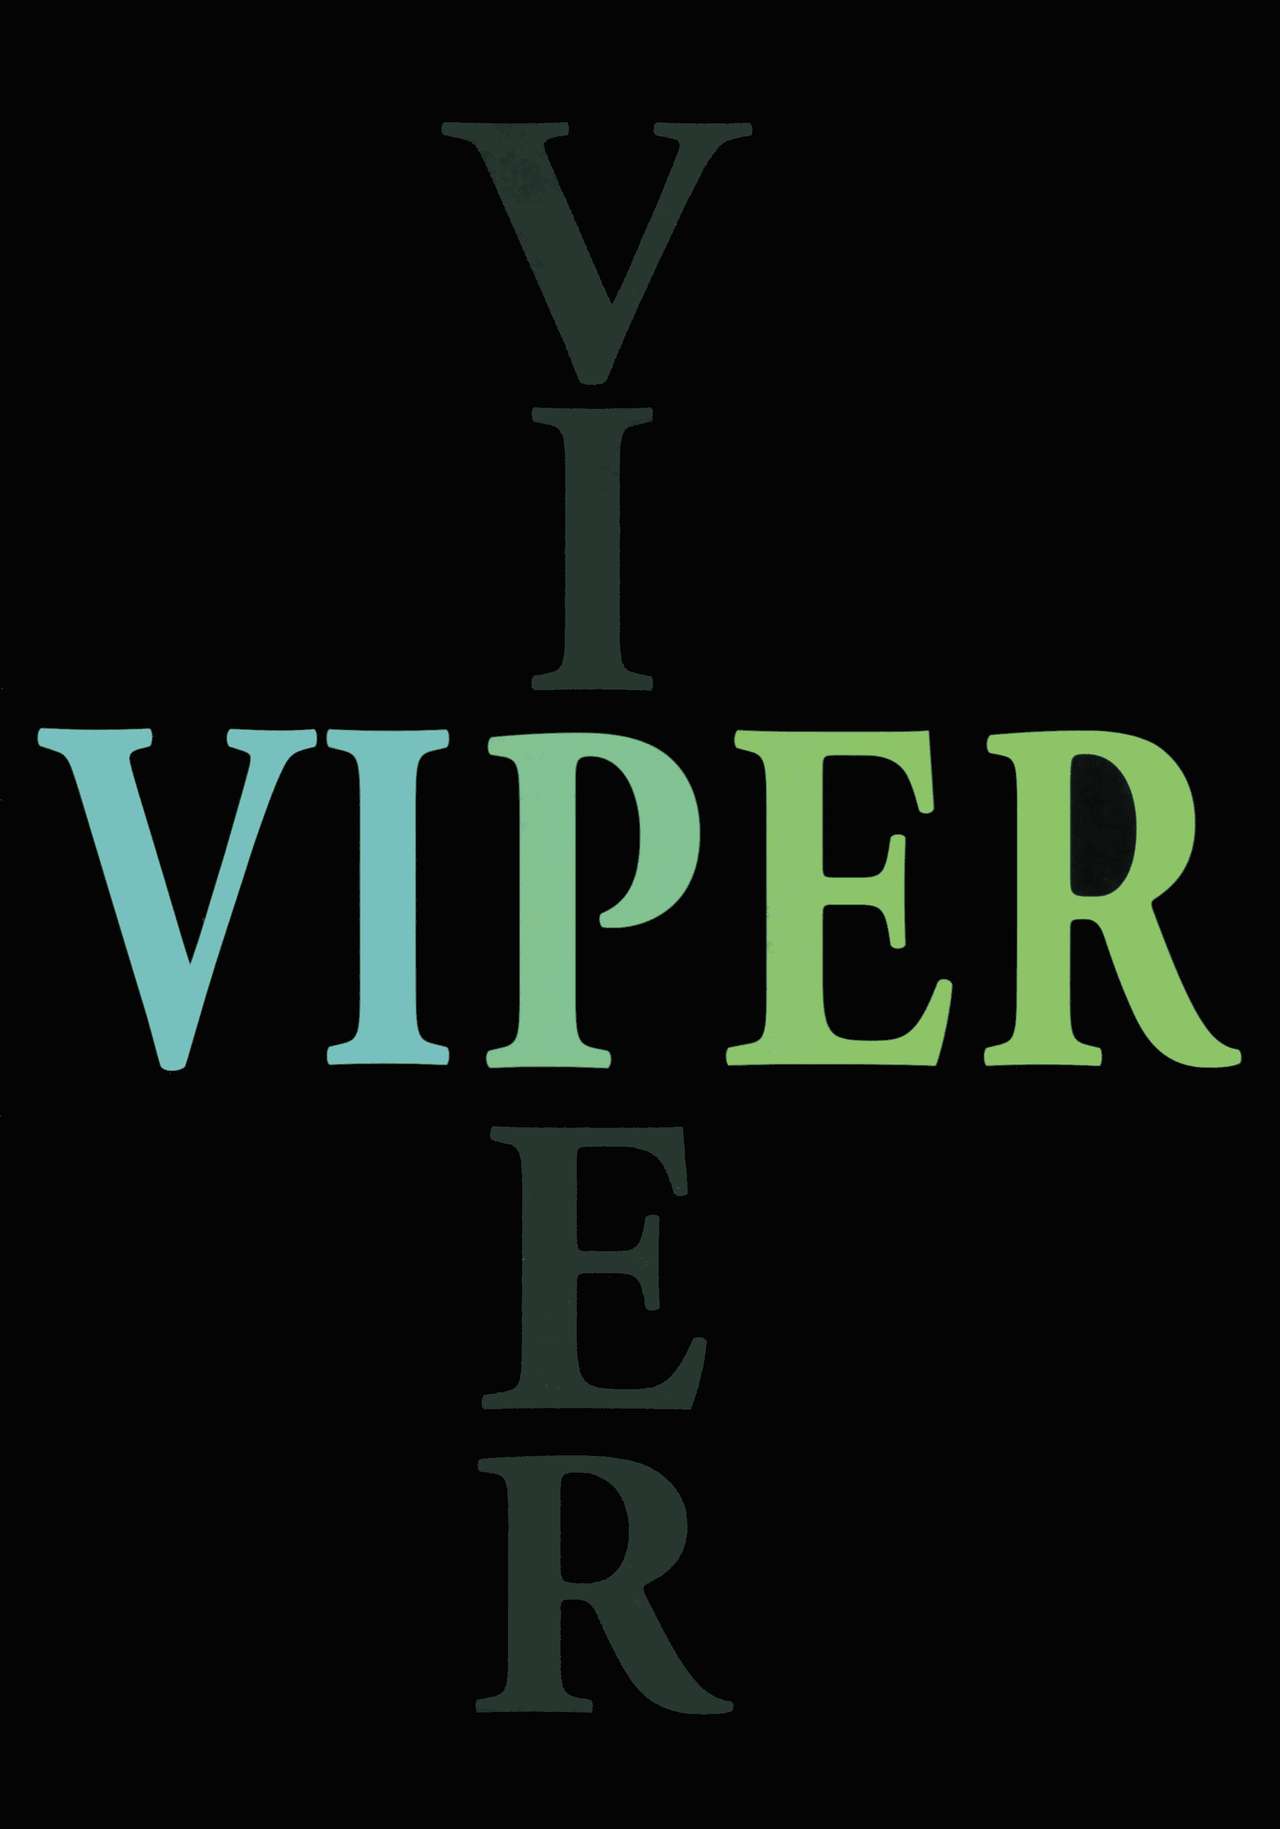 VIPER Series イラスト原画集 IV